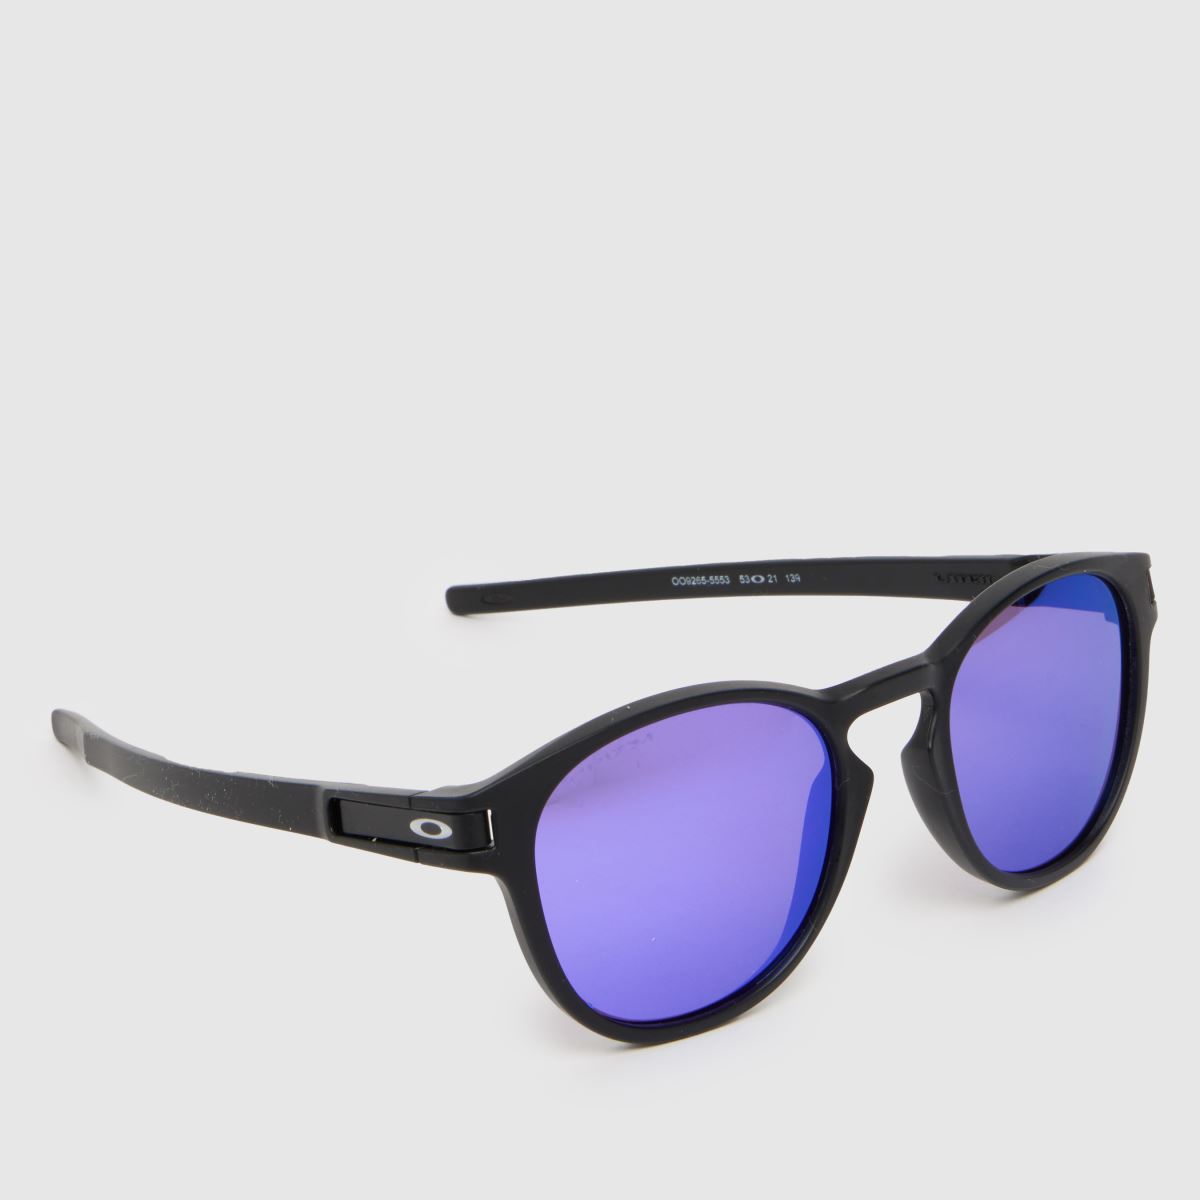 Oakley black latch sunglasses